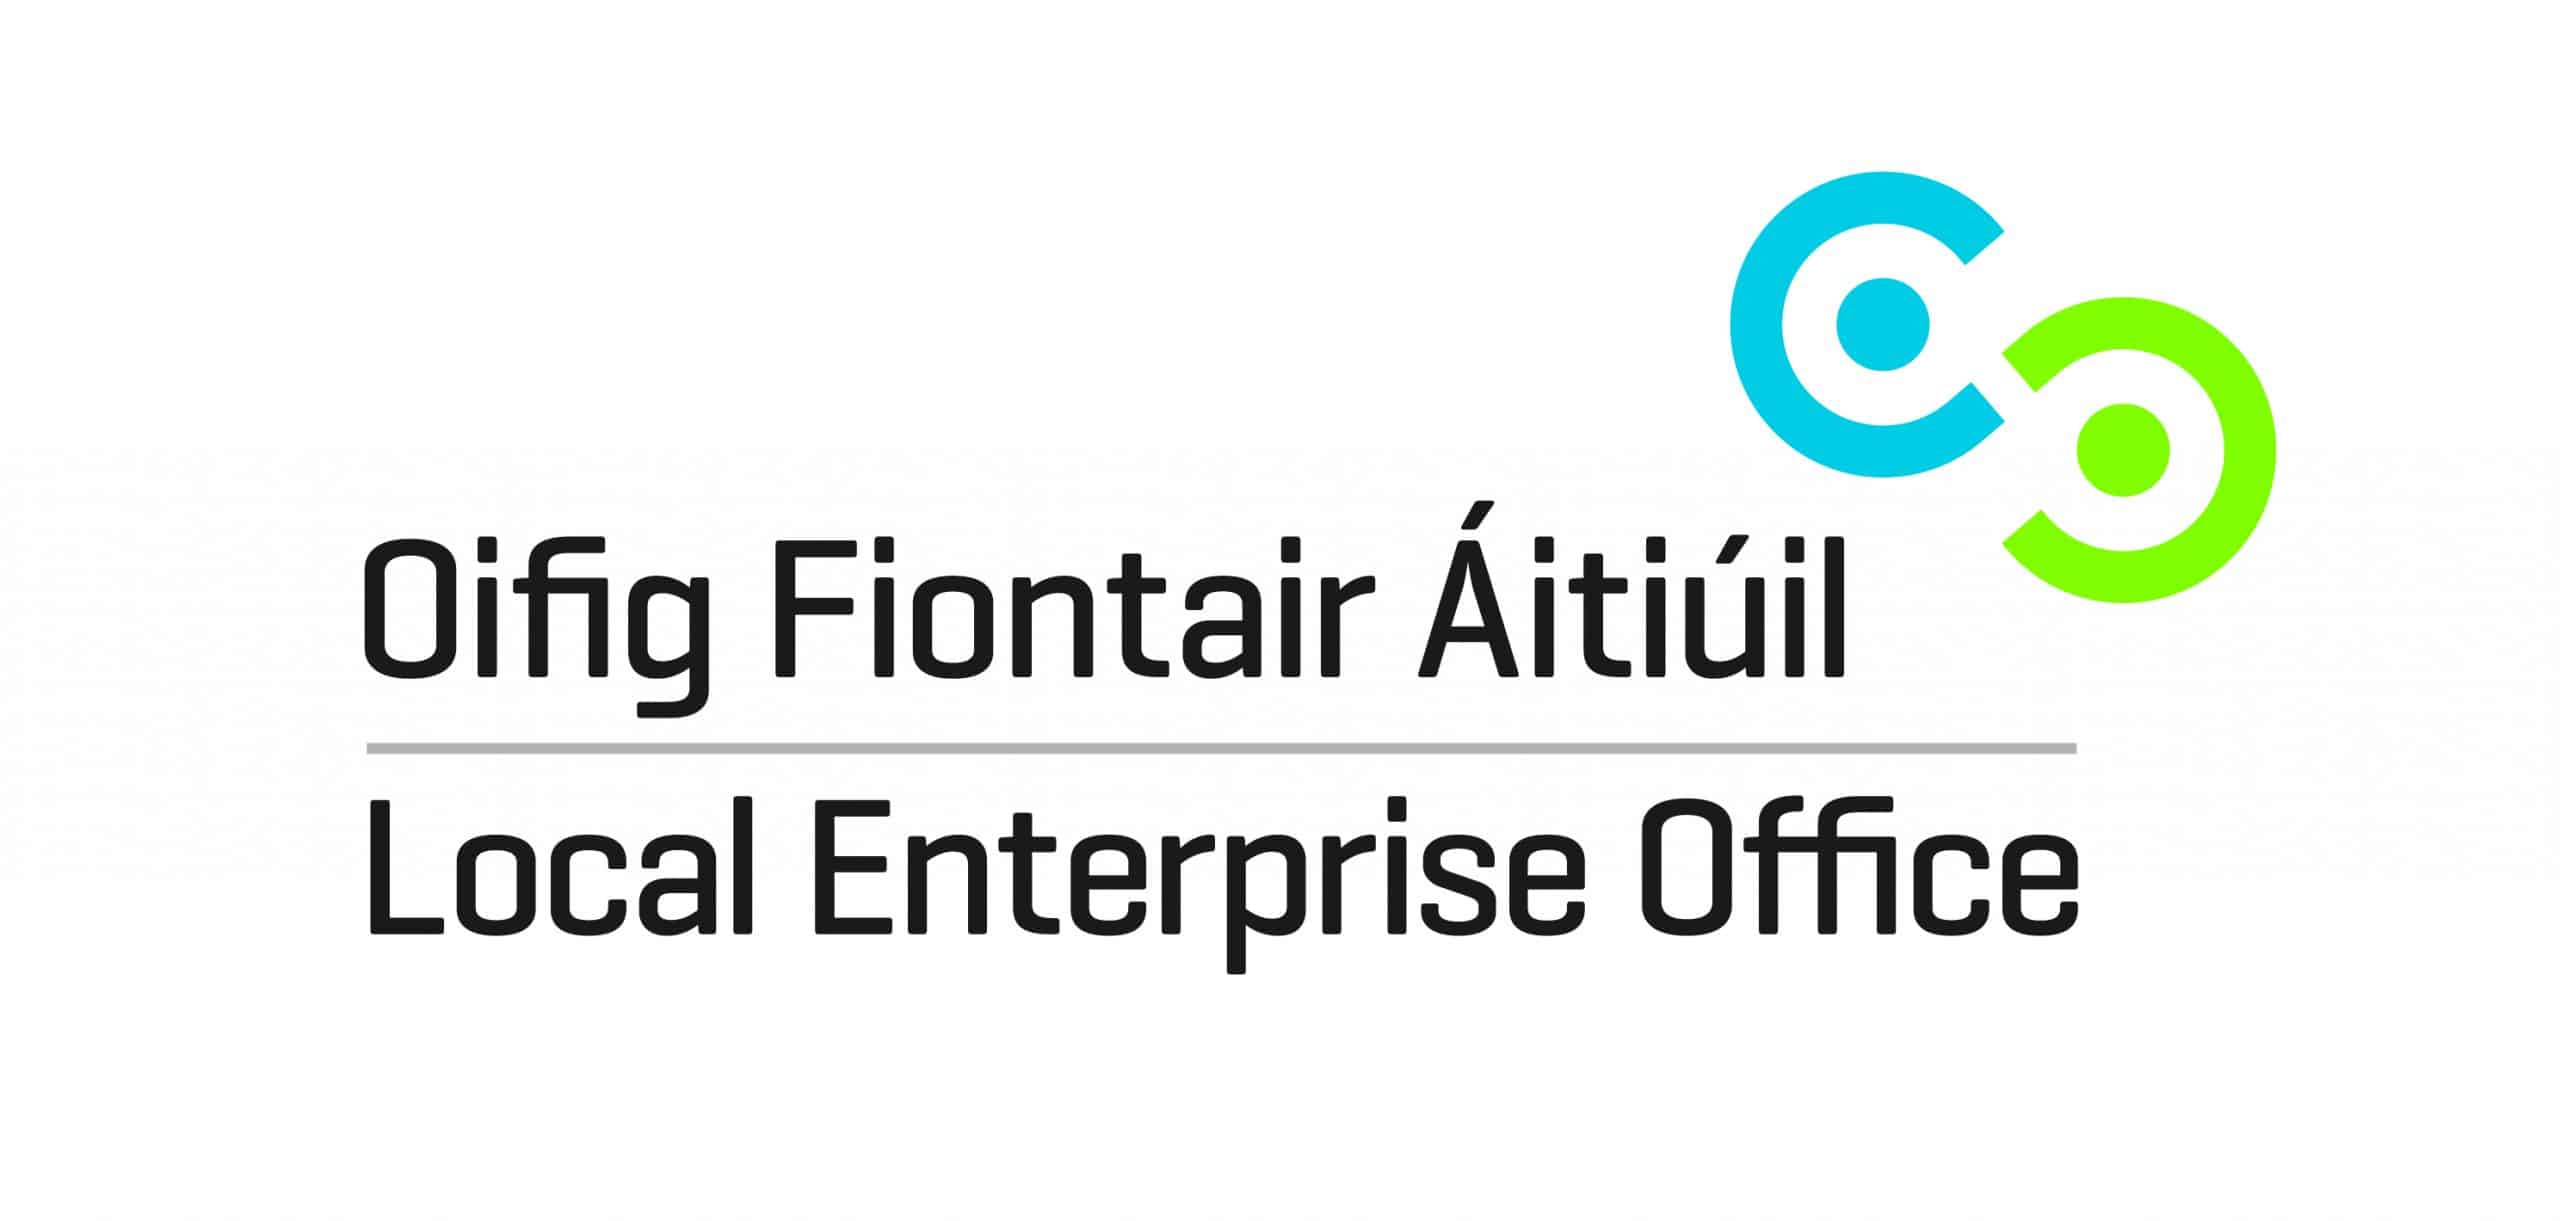 logo galway local enterprise office